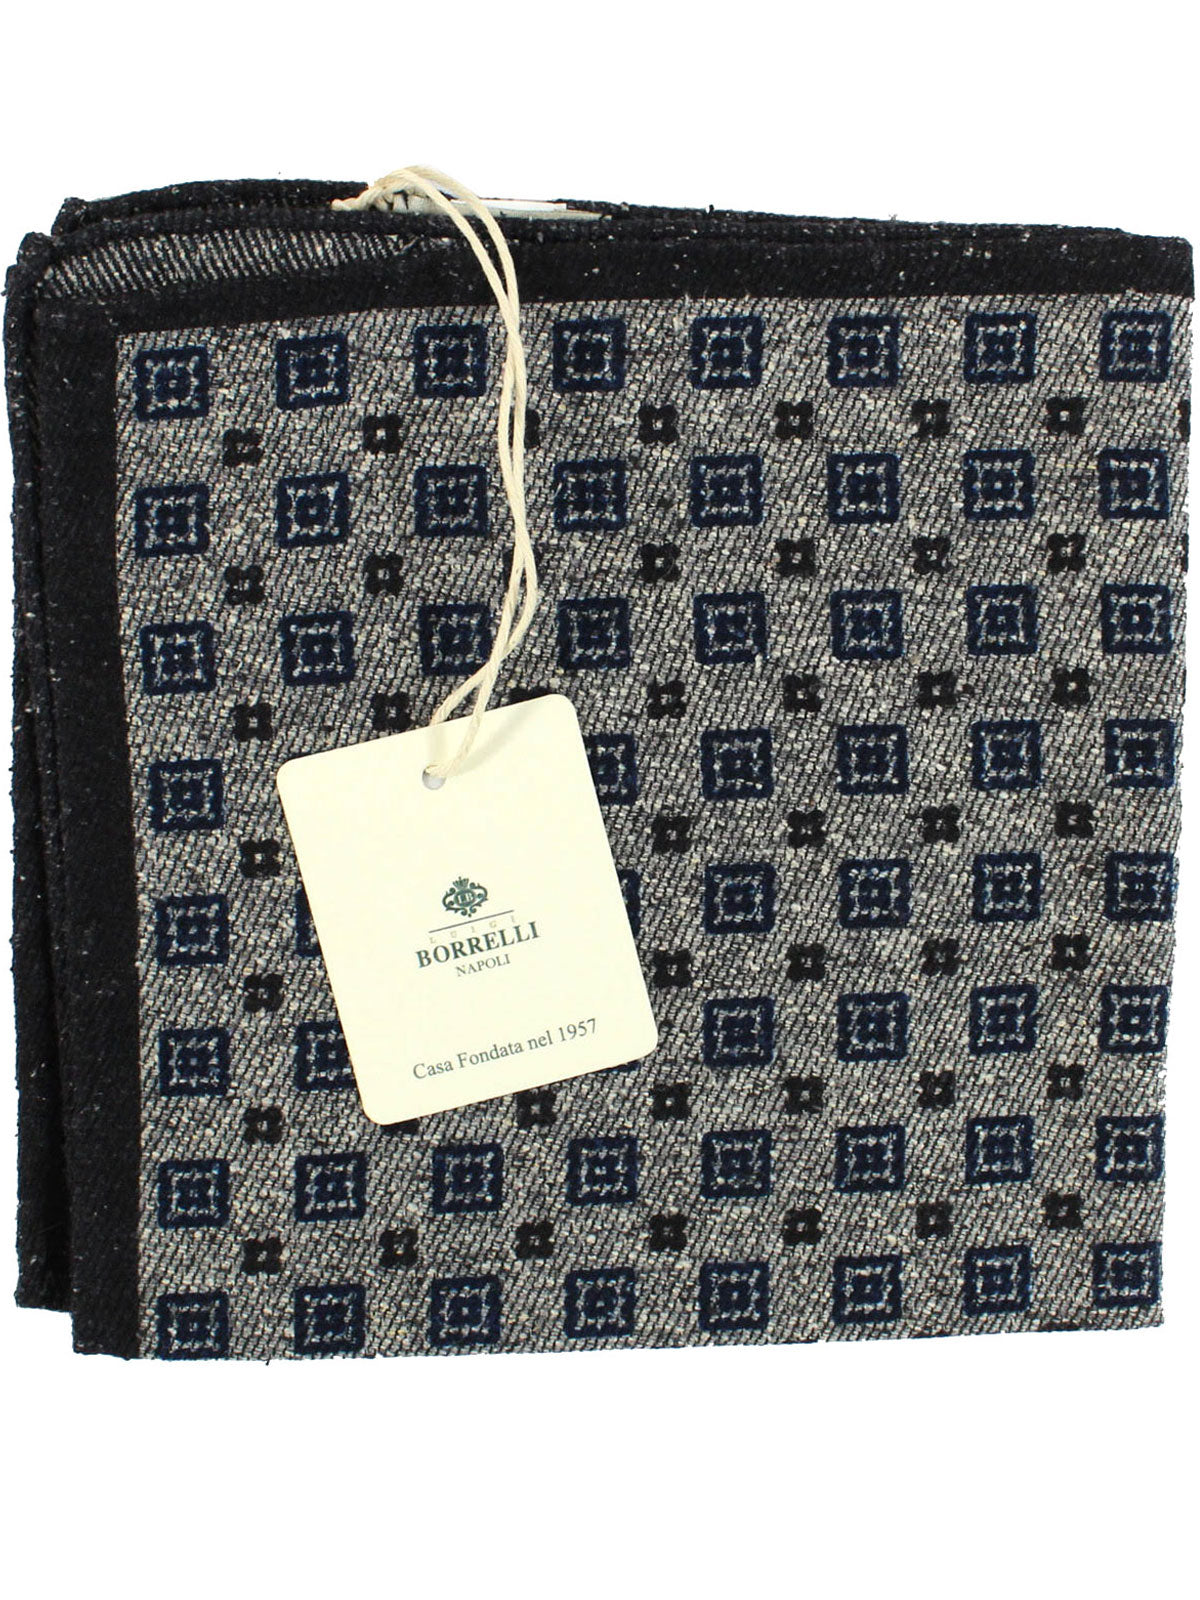 Luigi Borrelli Wool Cashmere Pocket Square Gray Navy Geometric Design